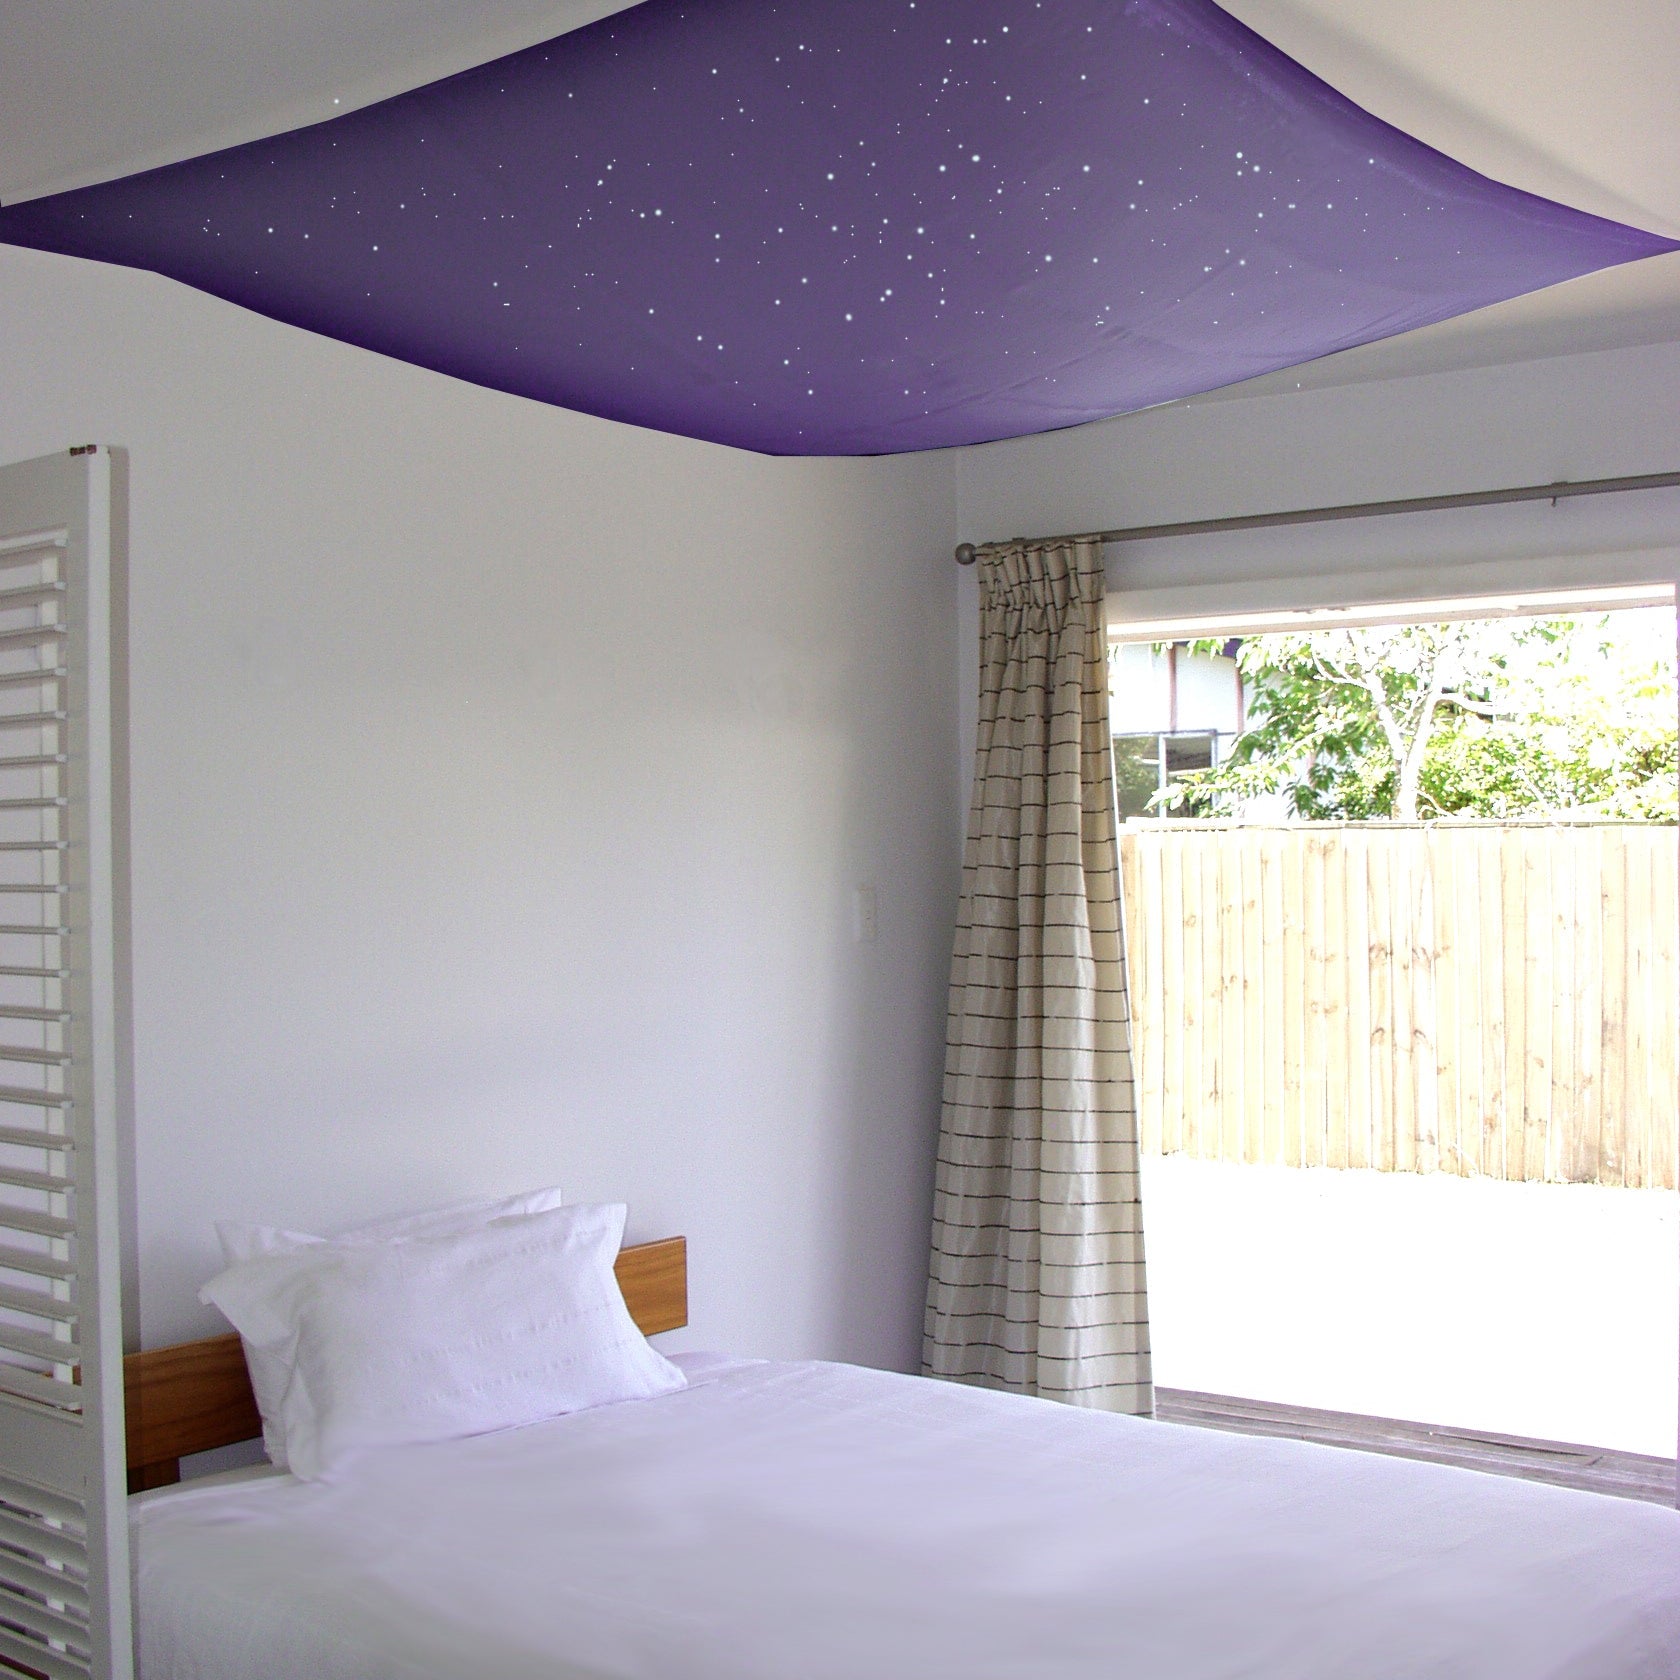 purple glow in the dark star ceiling fabric hanging. 